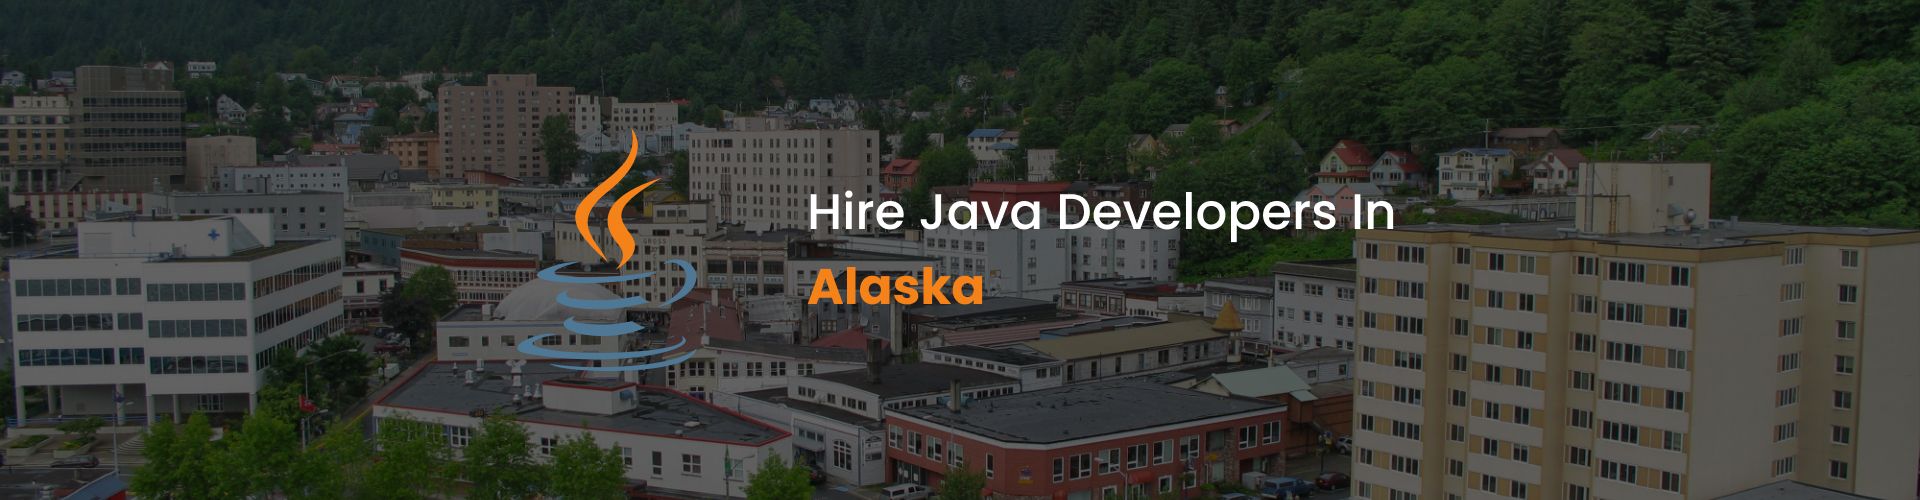 hire java developers in alaska